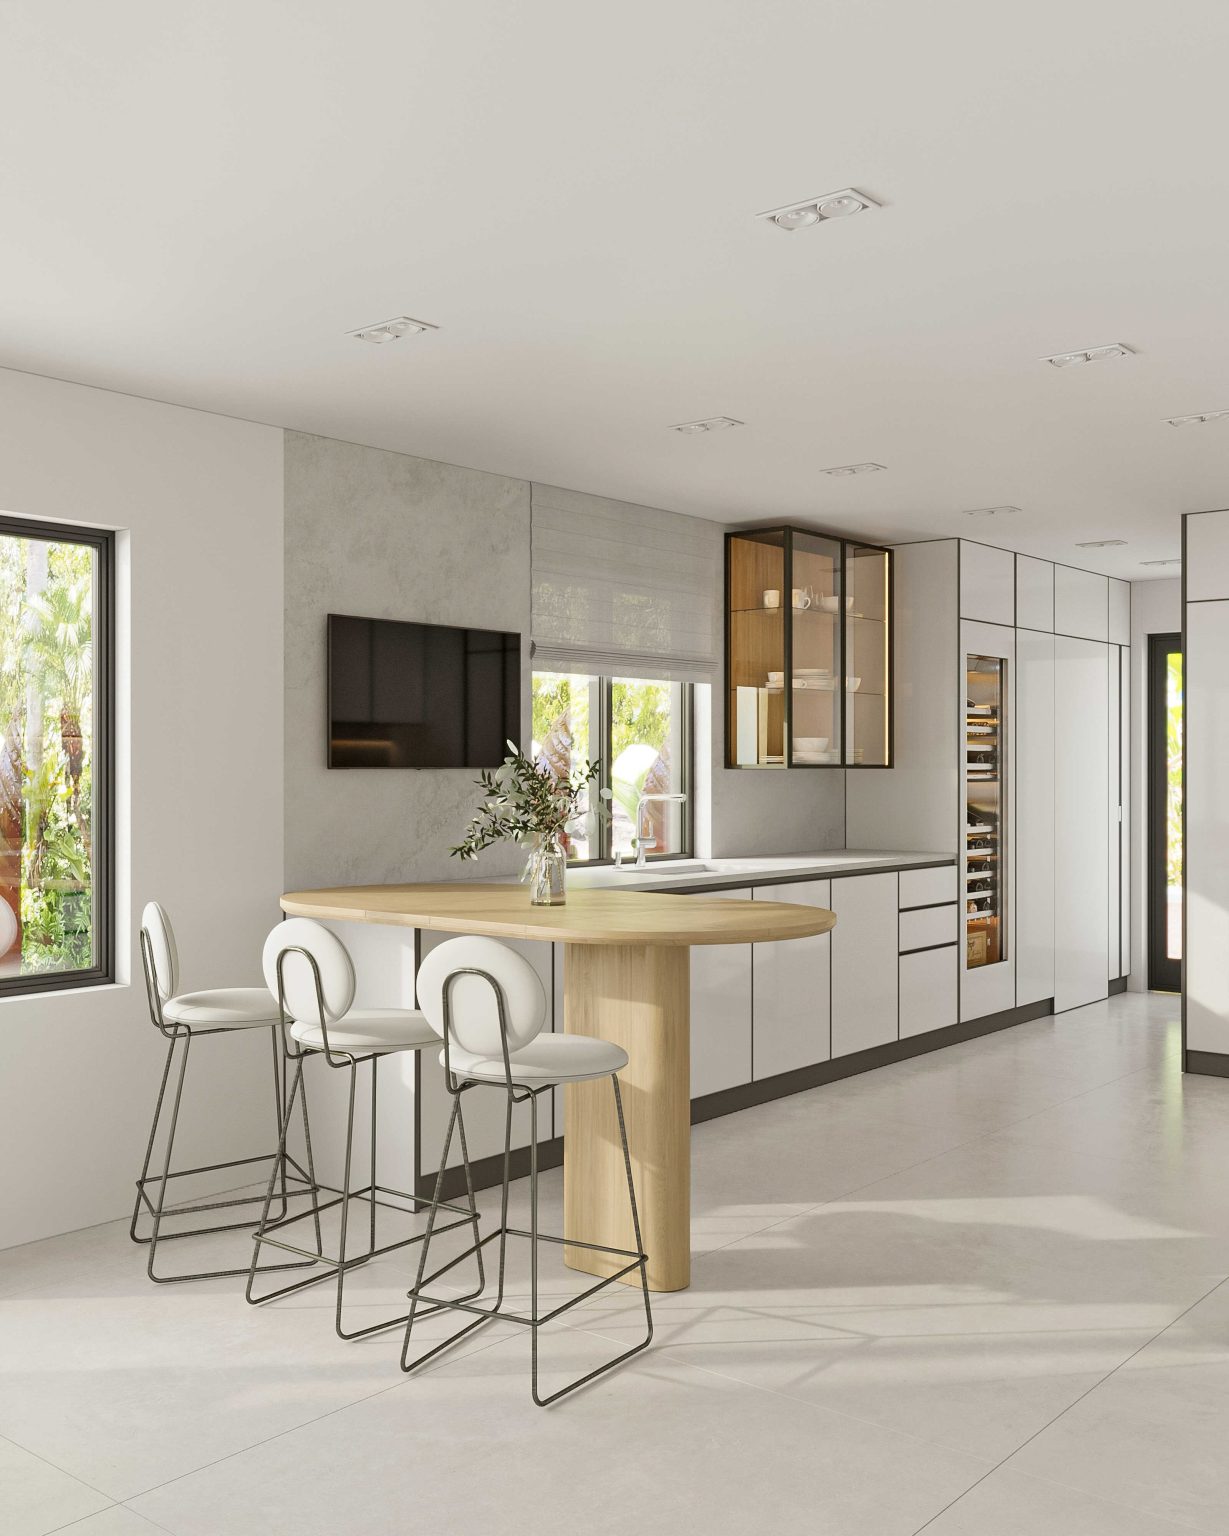 A coastal-inspired kitchen designed by Natalia Starinova, bringing the beach vibes to Miami